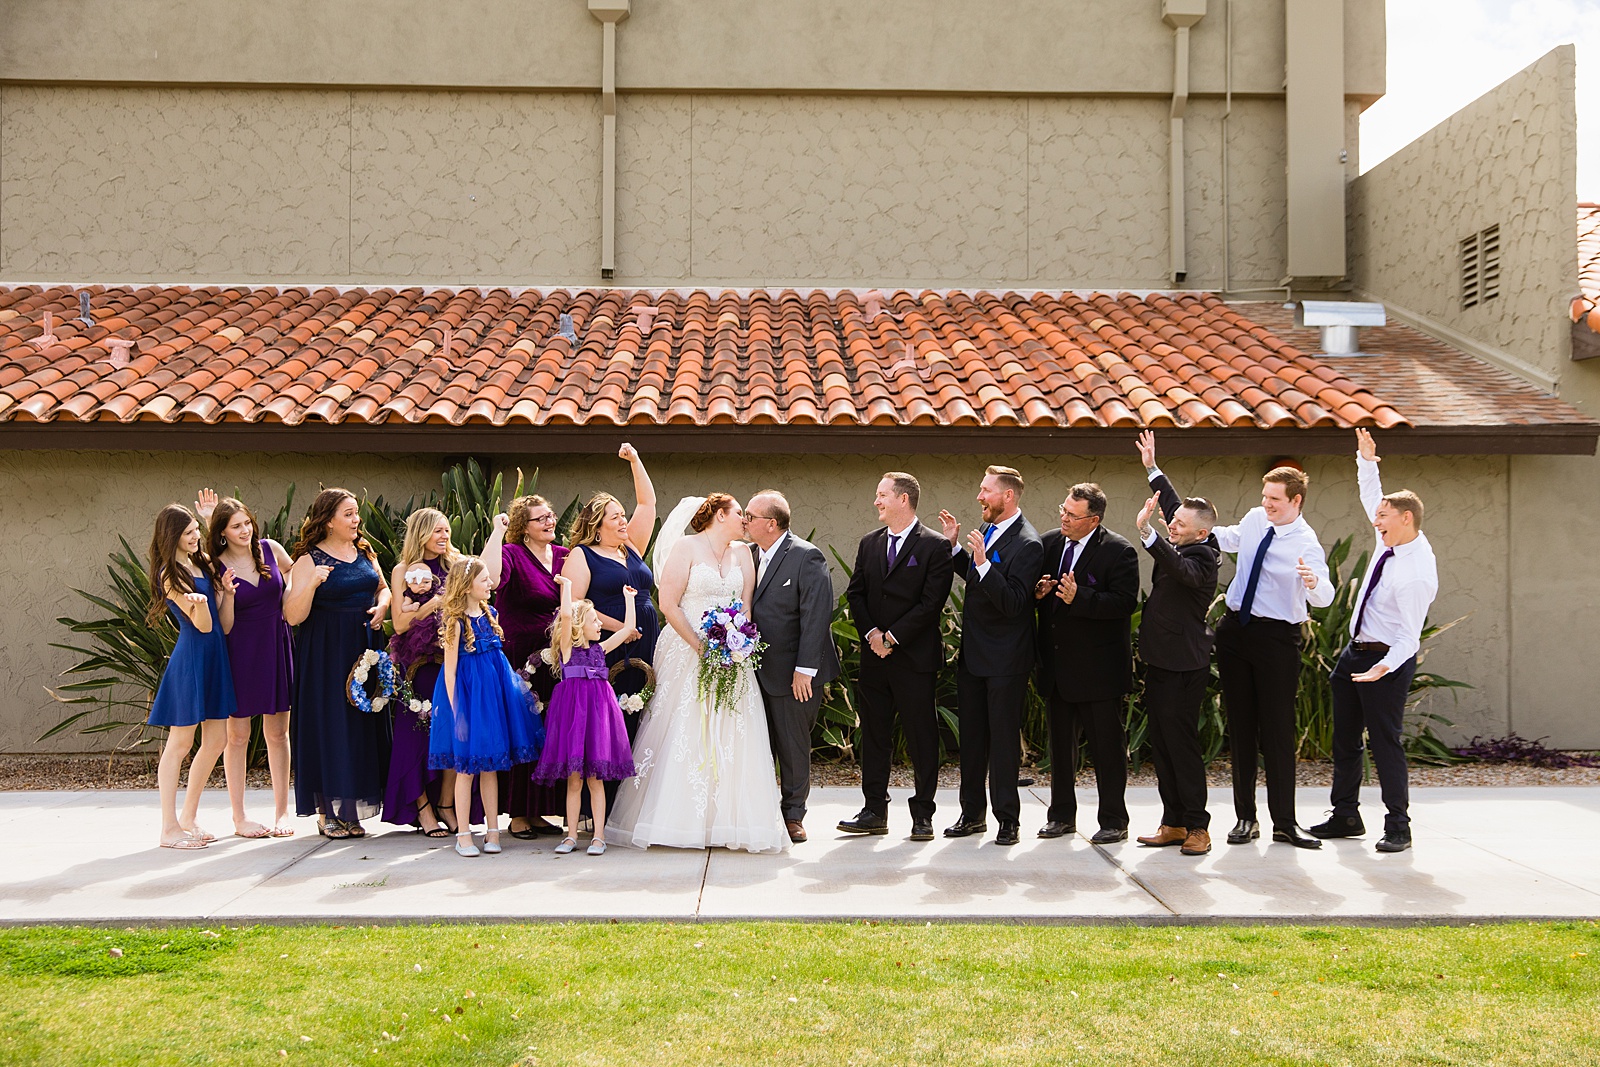 Bridal party having fun together at Sun Valley Church weding by Arizona wedding photographer PMA Photography.